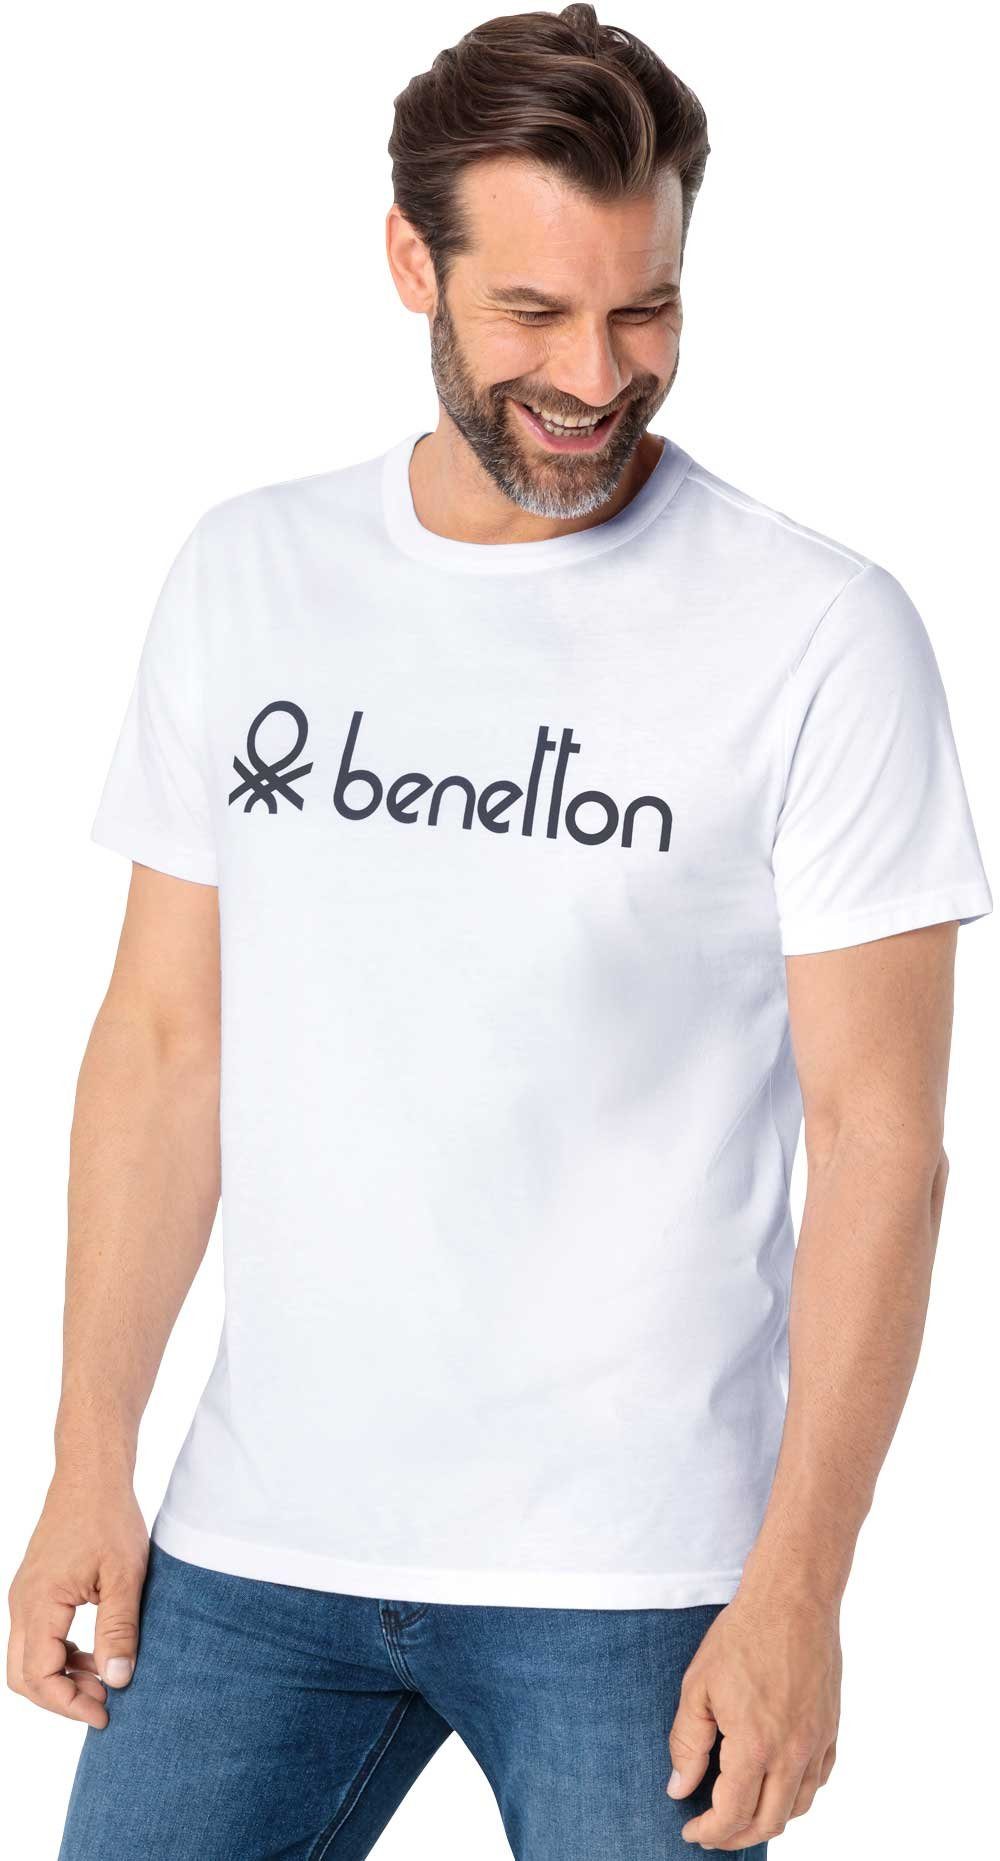 United Colors of Baumwolle weiß T-Shirt aus Benetton